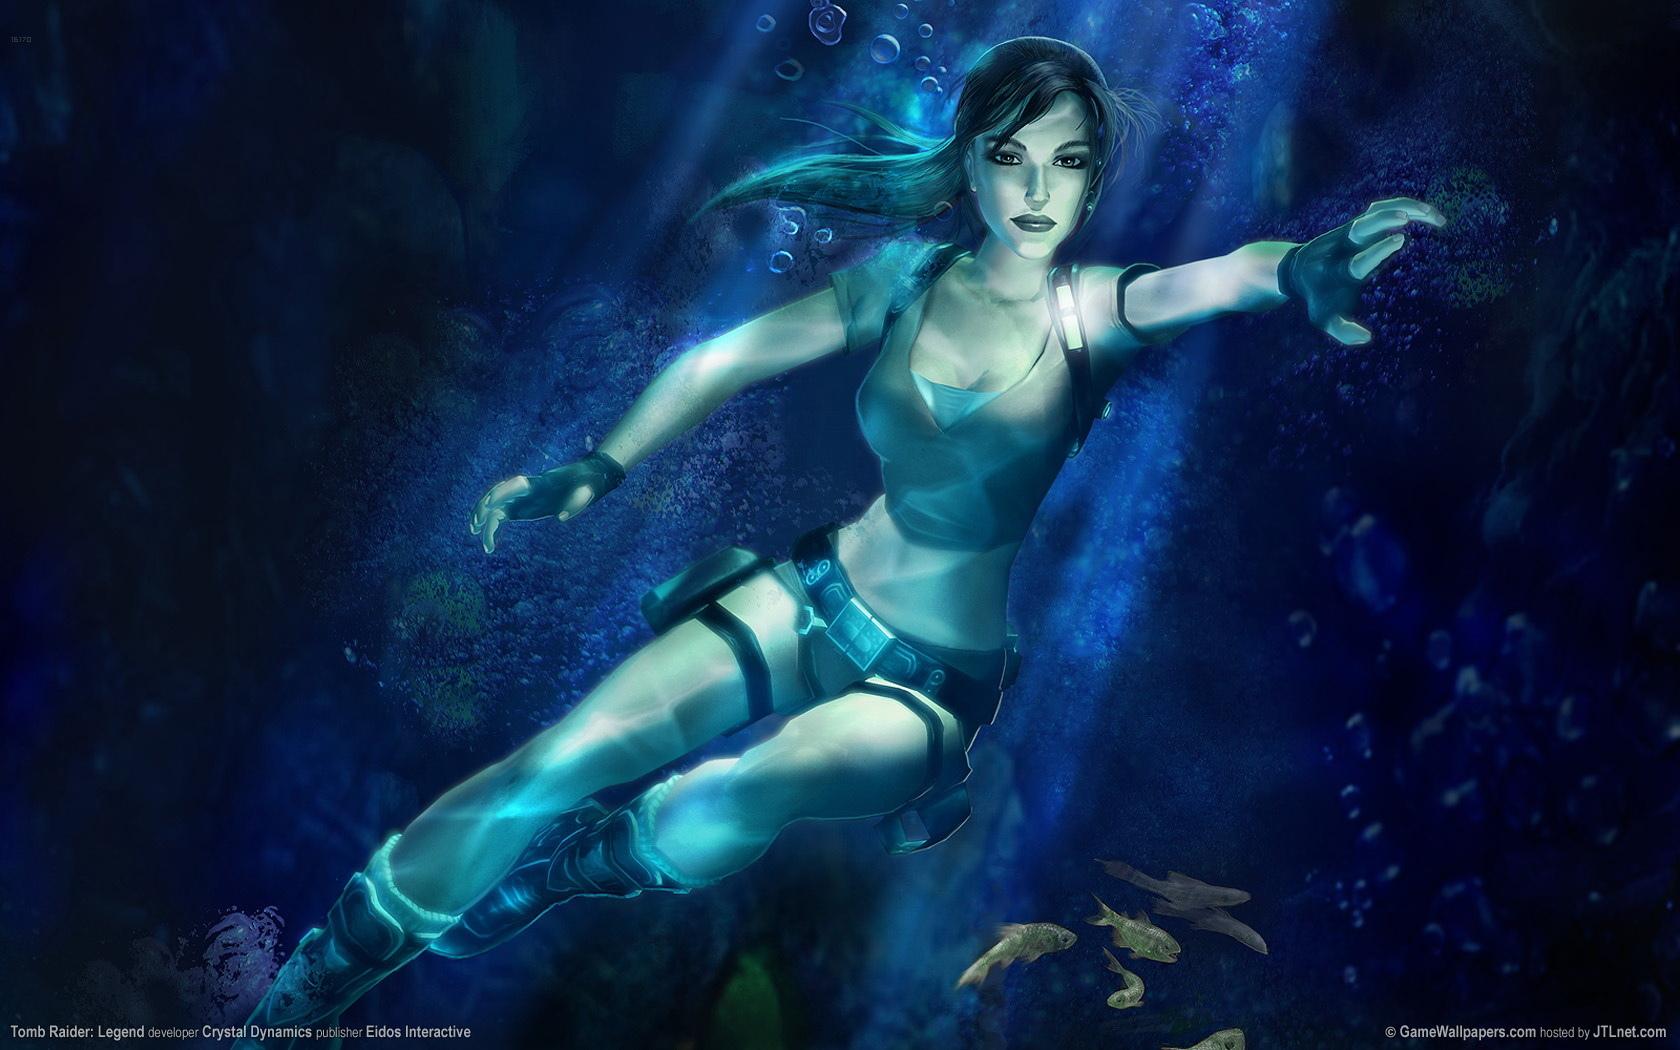 Tomb Raider Legend at 2048 x 2048 iPad size wallpapers HD quality